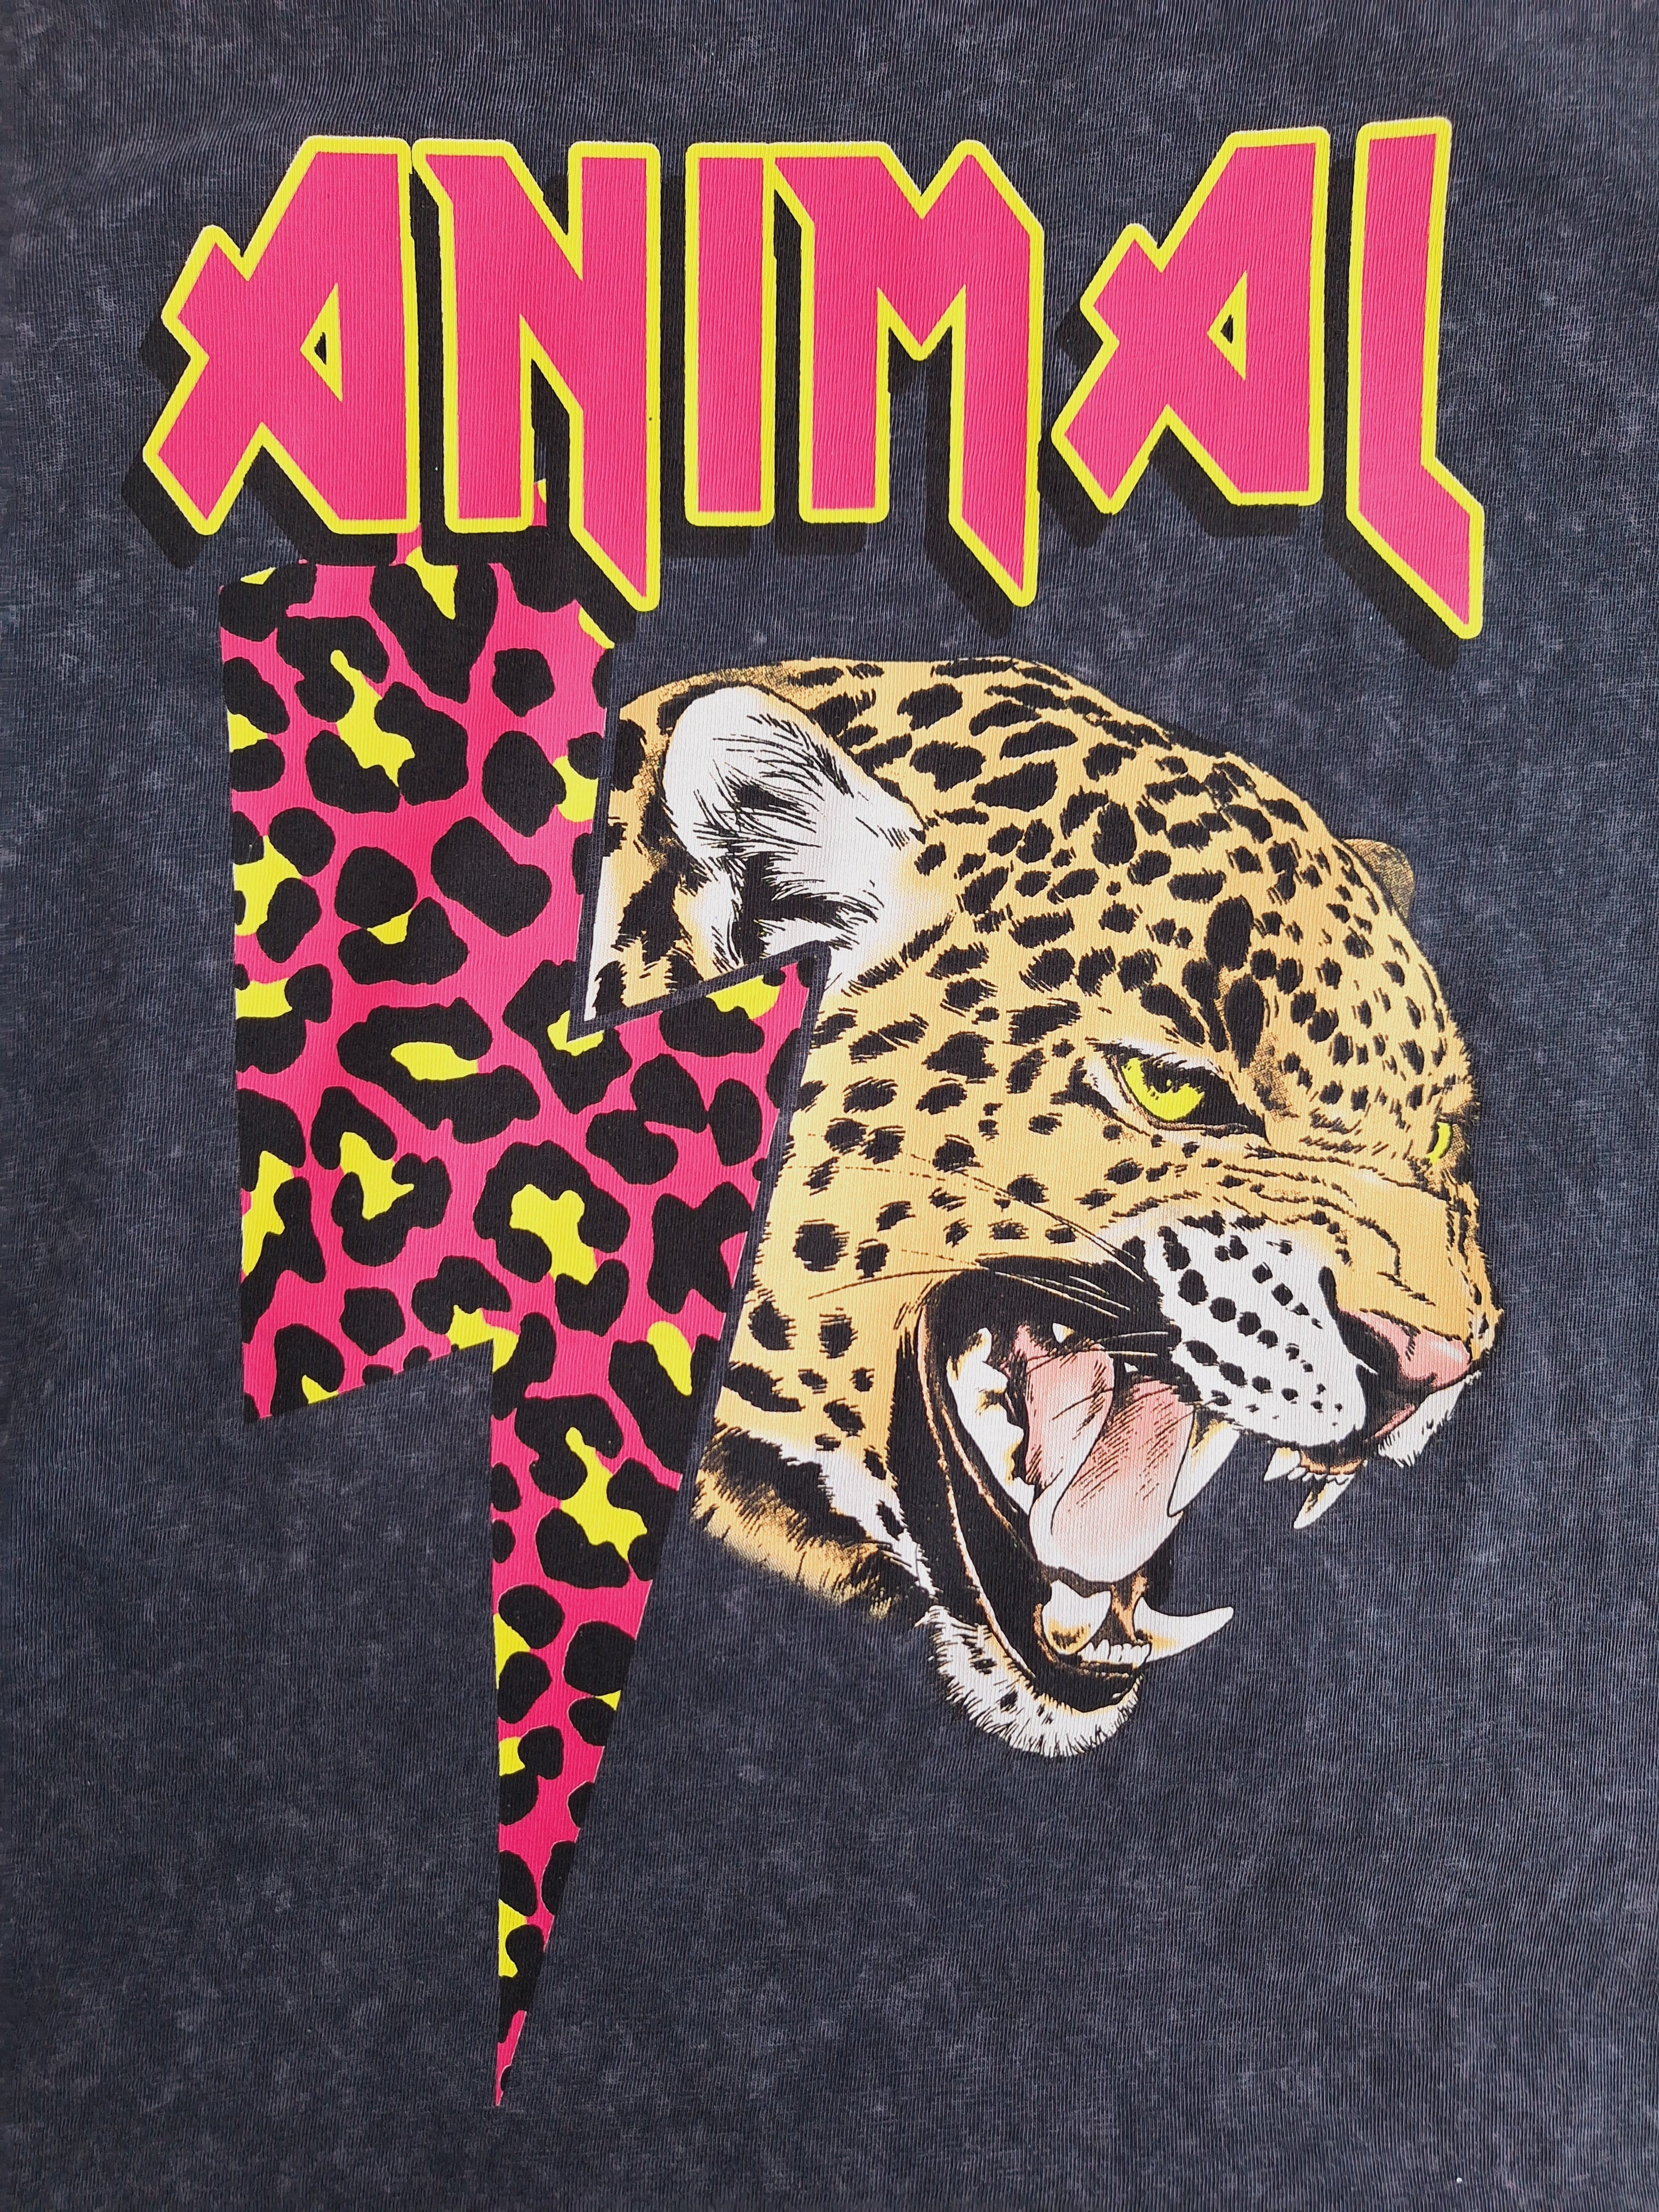 T-Shirt Animal